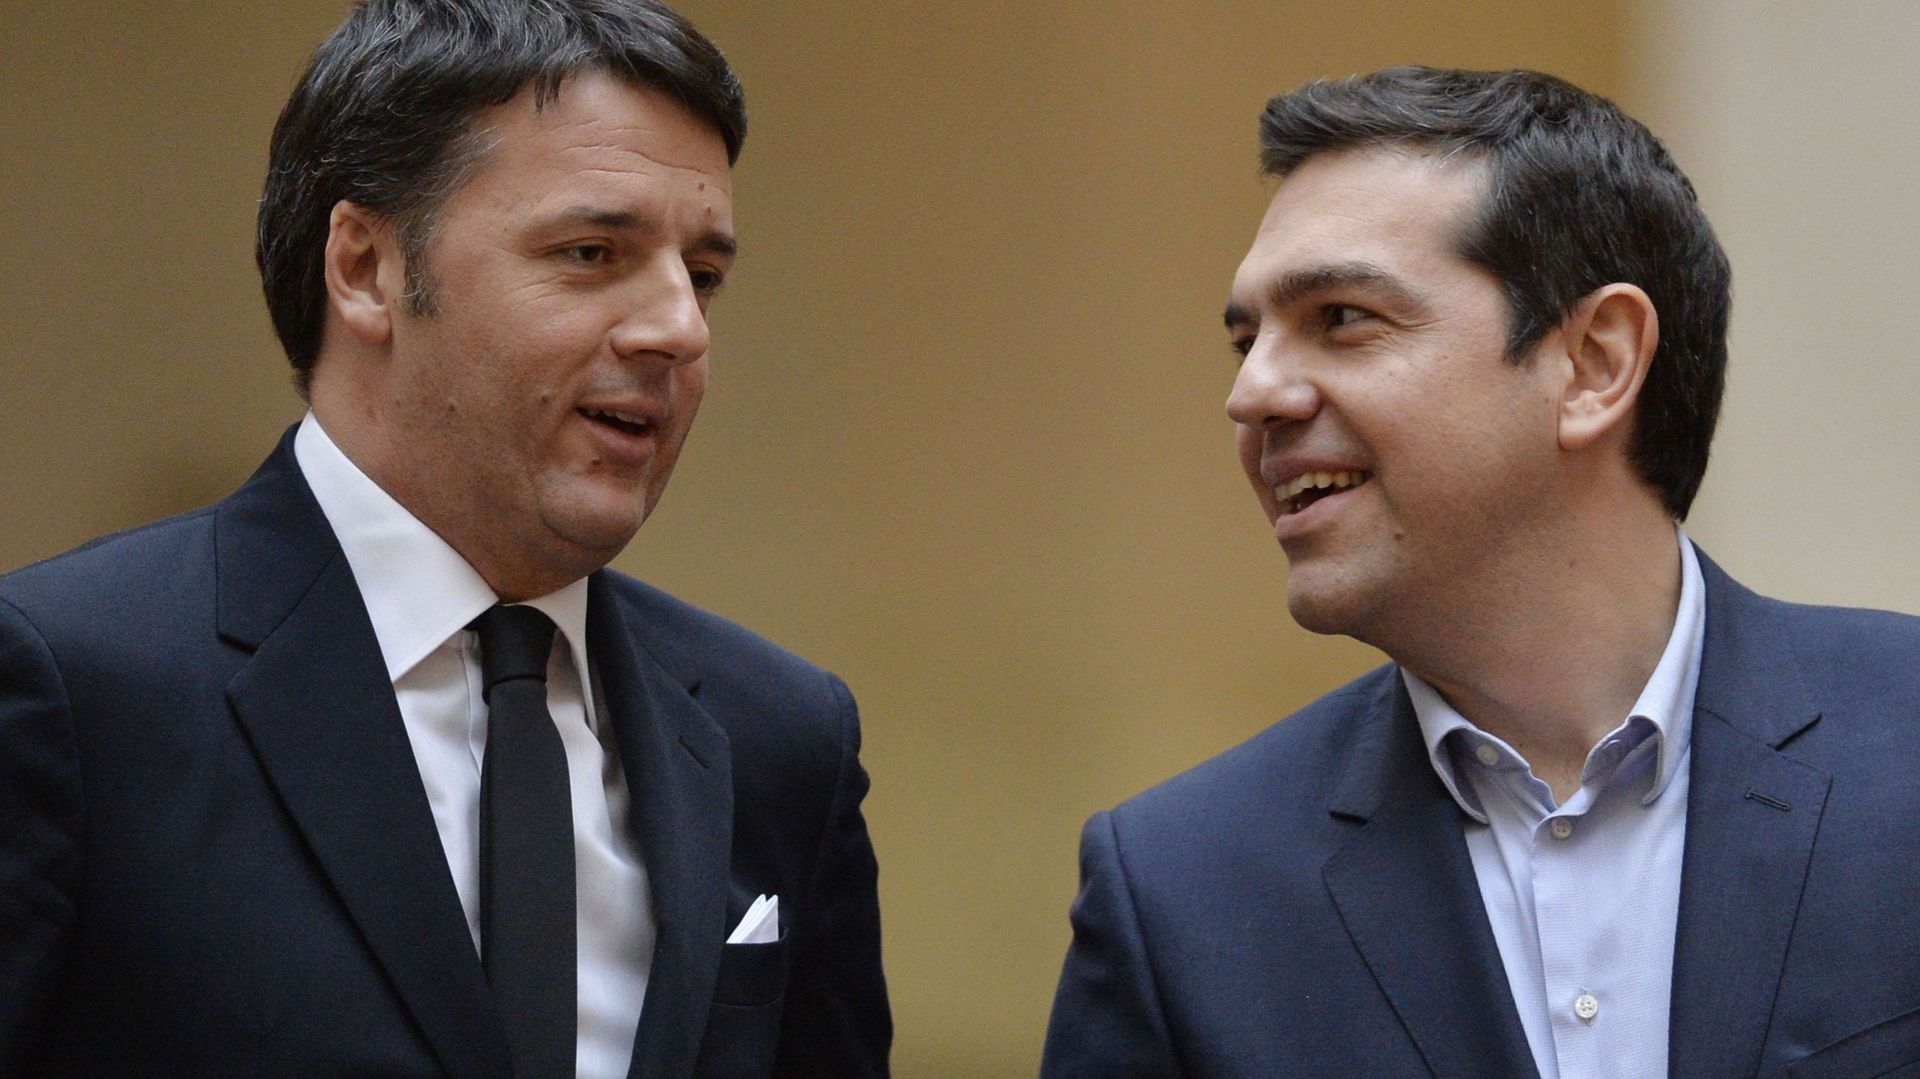 renzi-offre-une-cravate-italienne-a-tsipras-prevision-de-sortie-de-crise